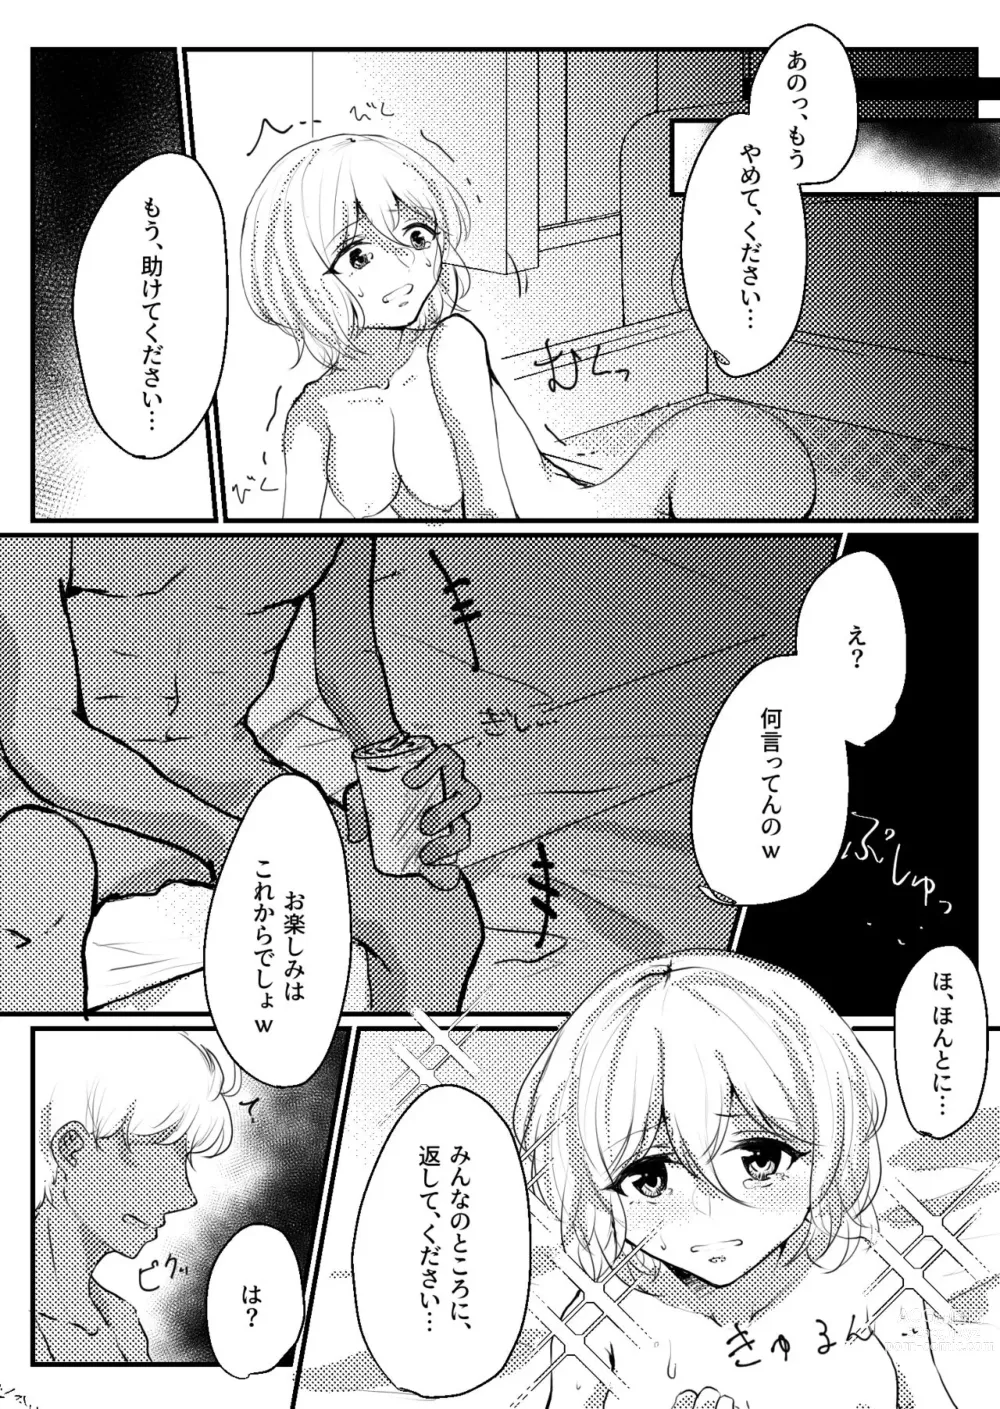 Page 5 of doujinshi Mashiro-chan MobRa